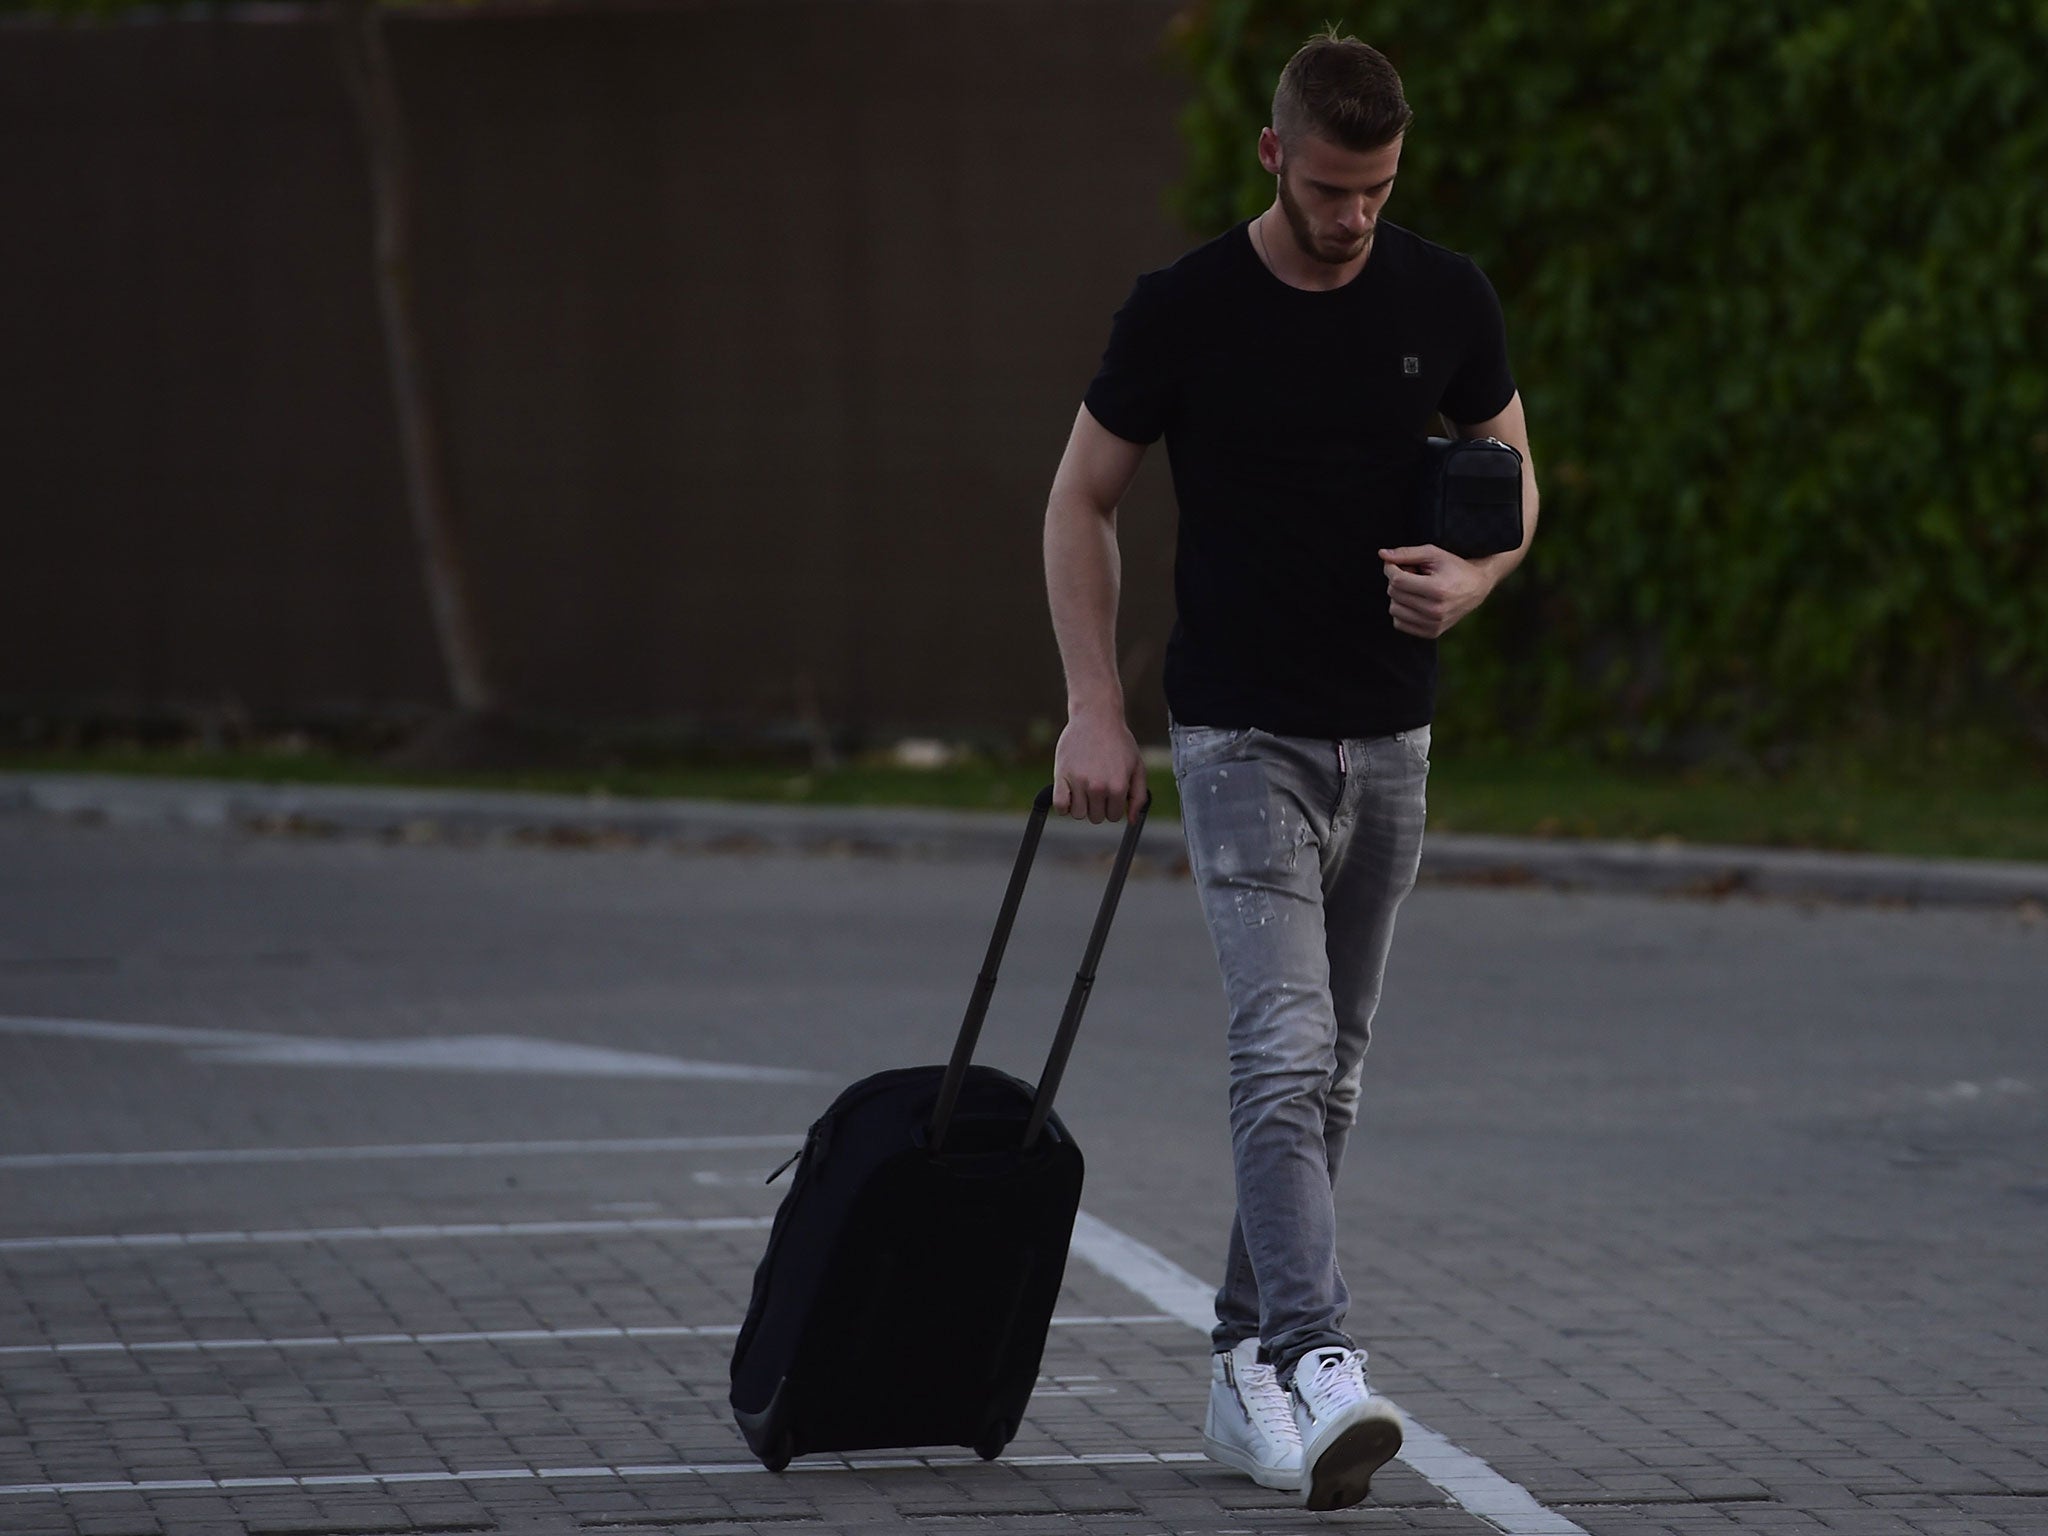 David De Gea arrives at Spain's training camp this week